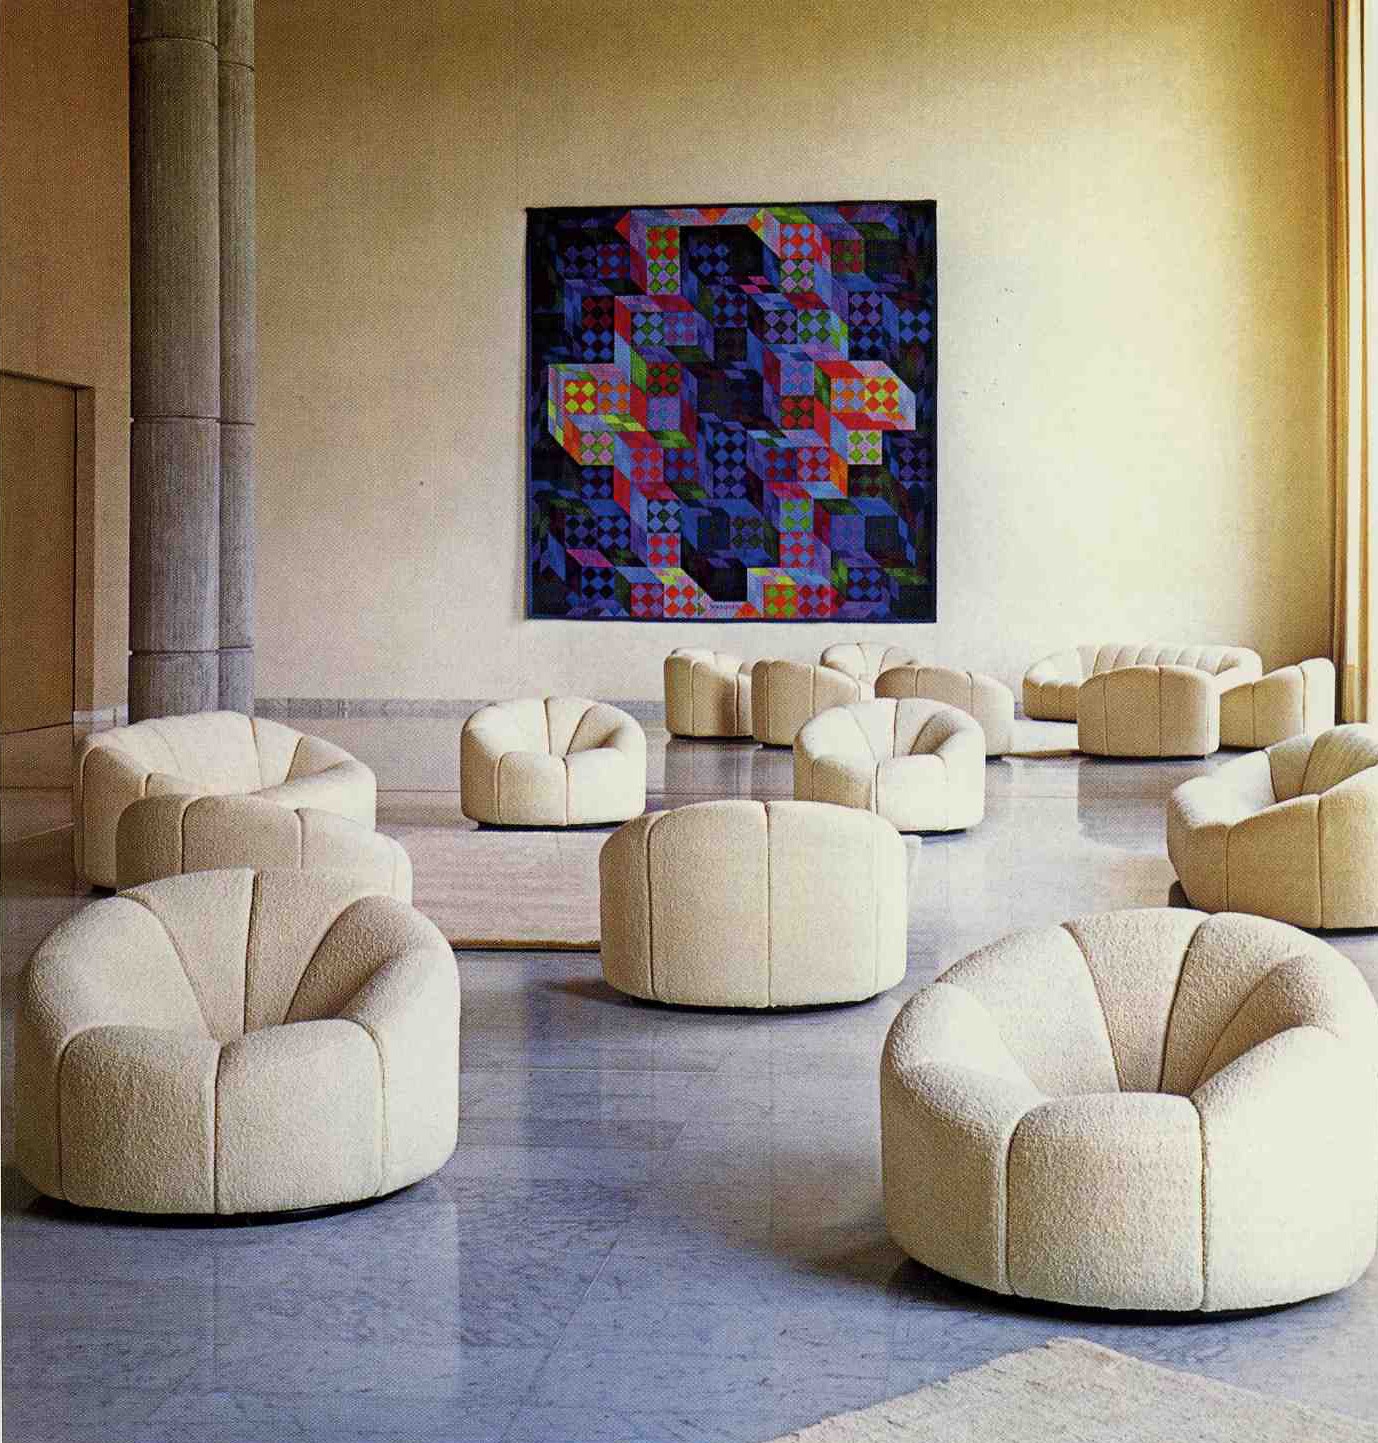 &Eacute;lys&eacute;e chairs&nbsp;at a prefacture in Nanterre, France, c. 1970s
&nbsp;